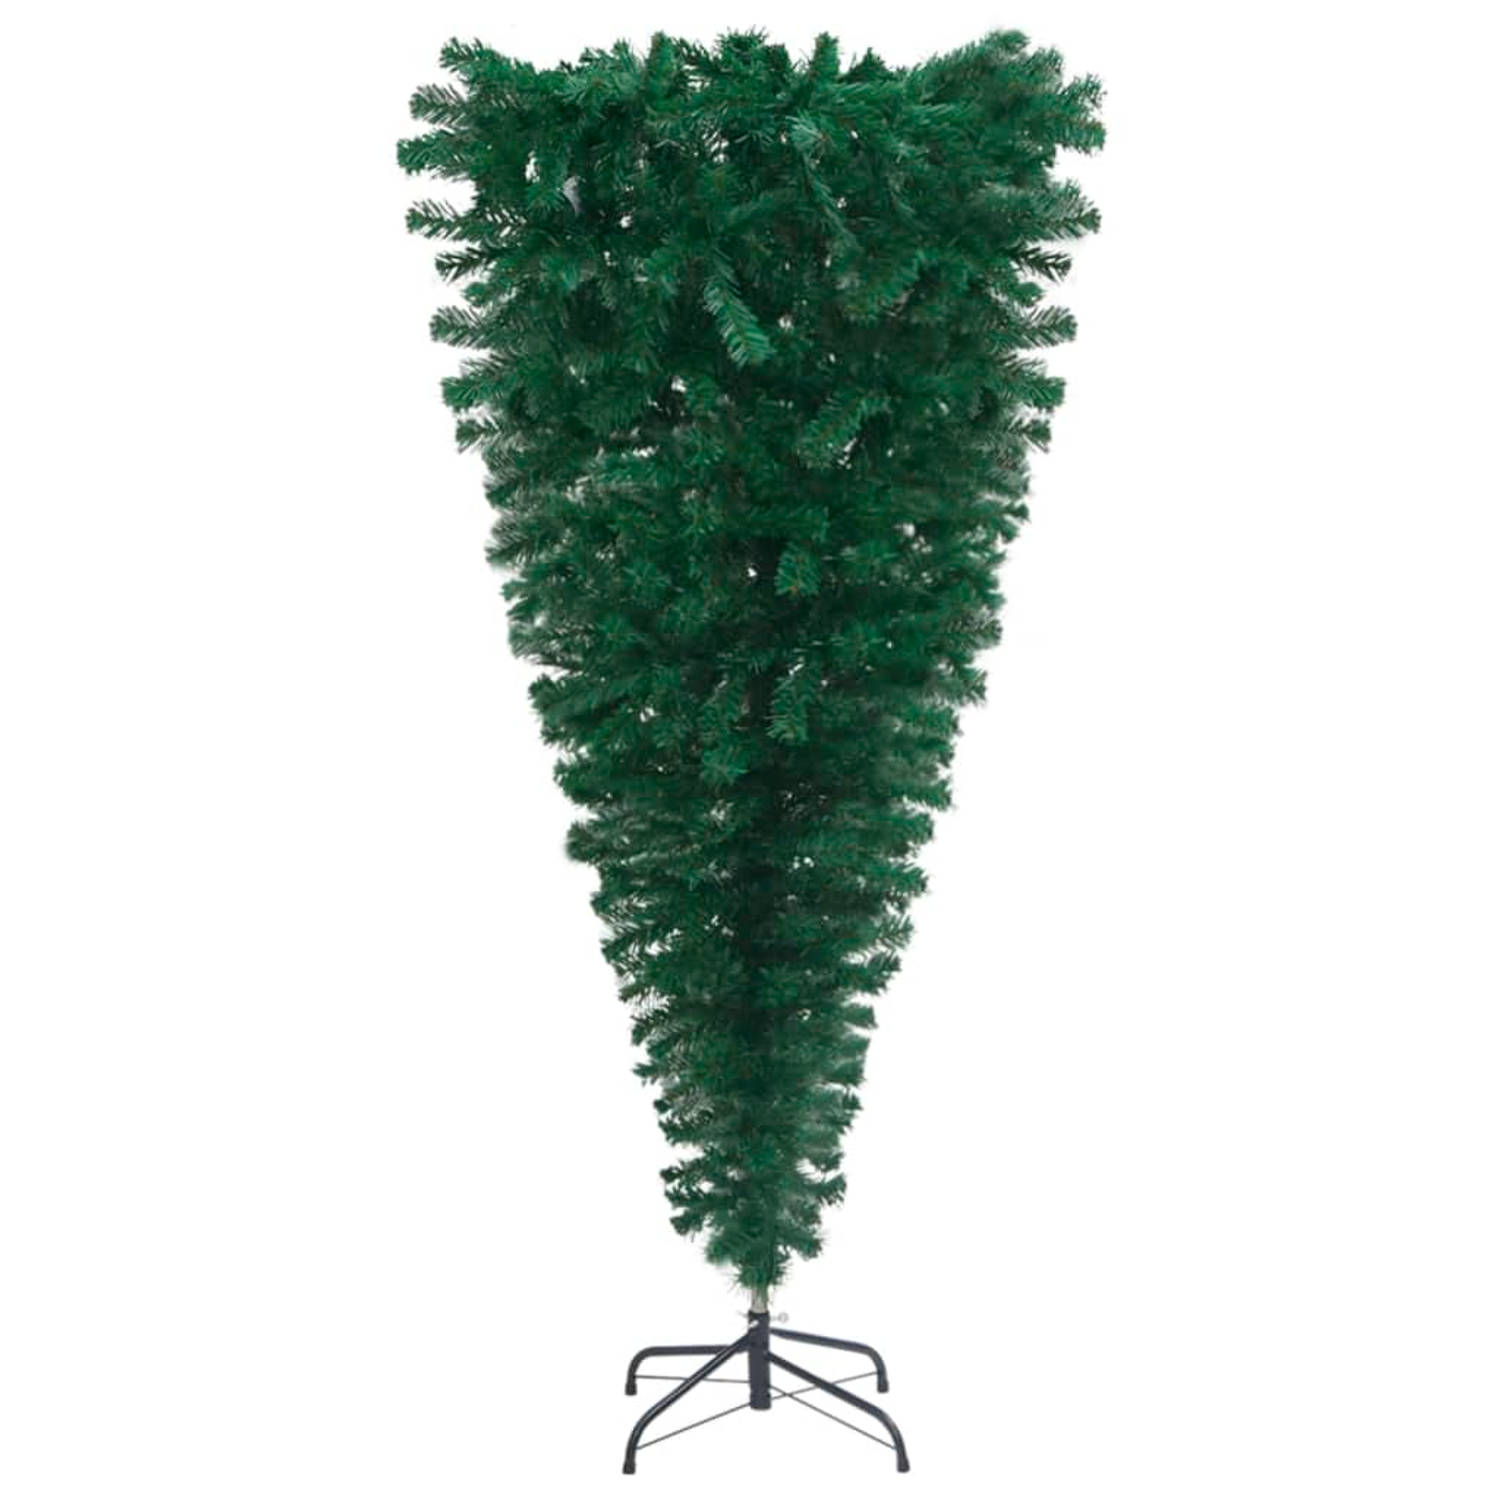 The Living Store omgekeerde kerstboom - groen PVC - 120 cm hoog - verstelbare takken - stalen standaard - 230 takken - eenvoudige montage - inclusief standaard